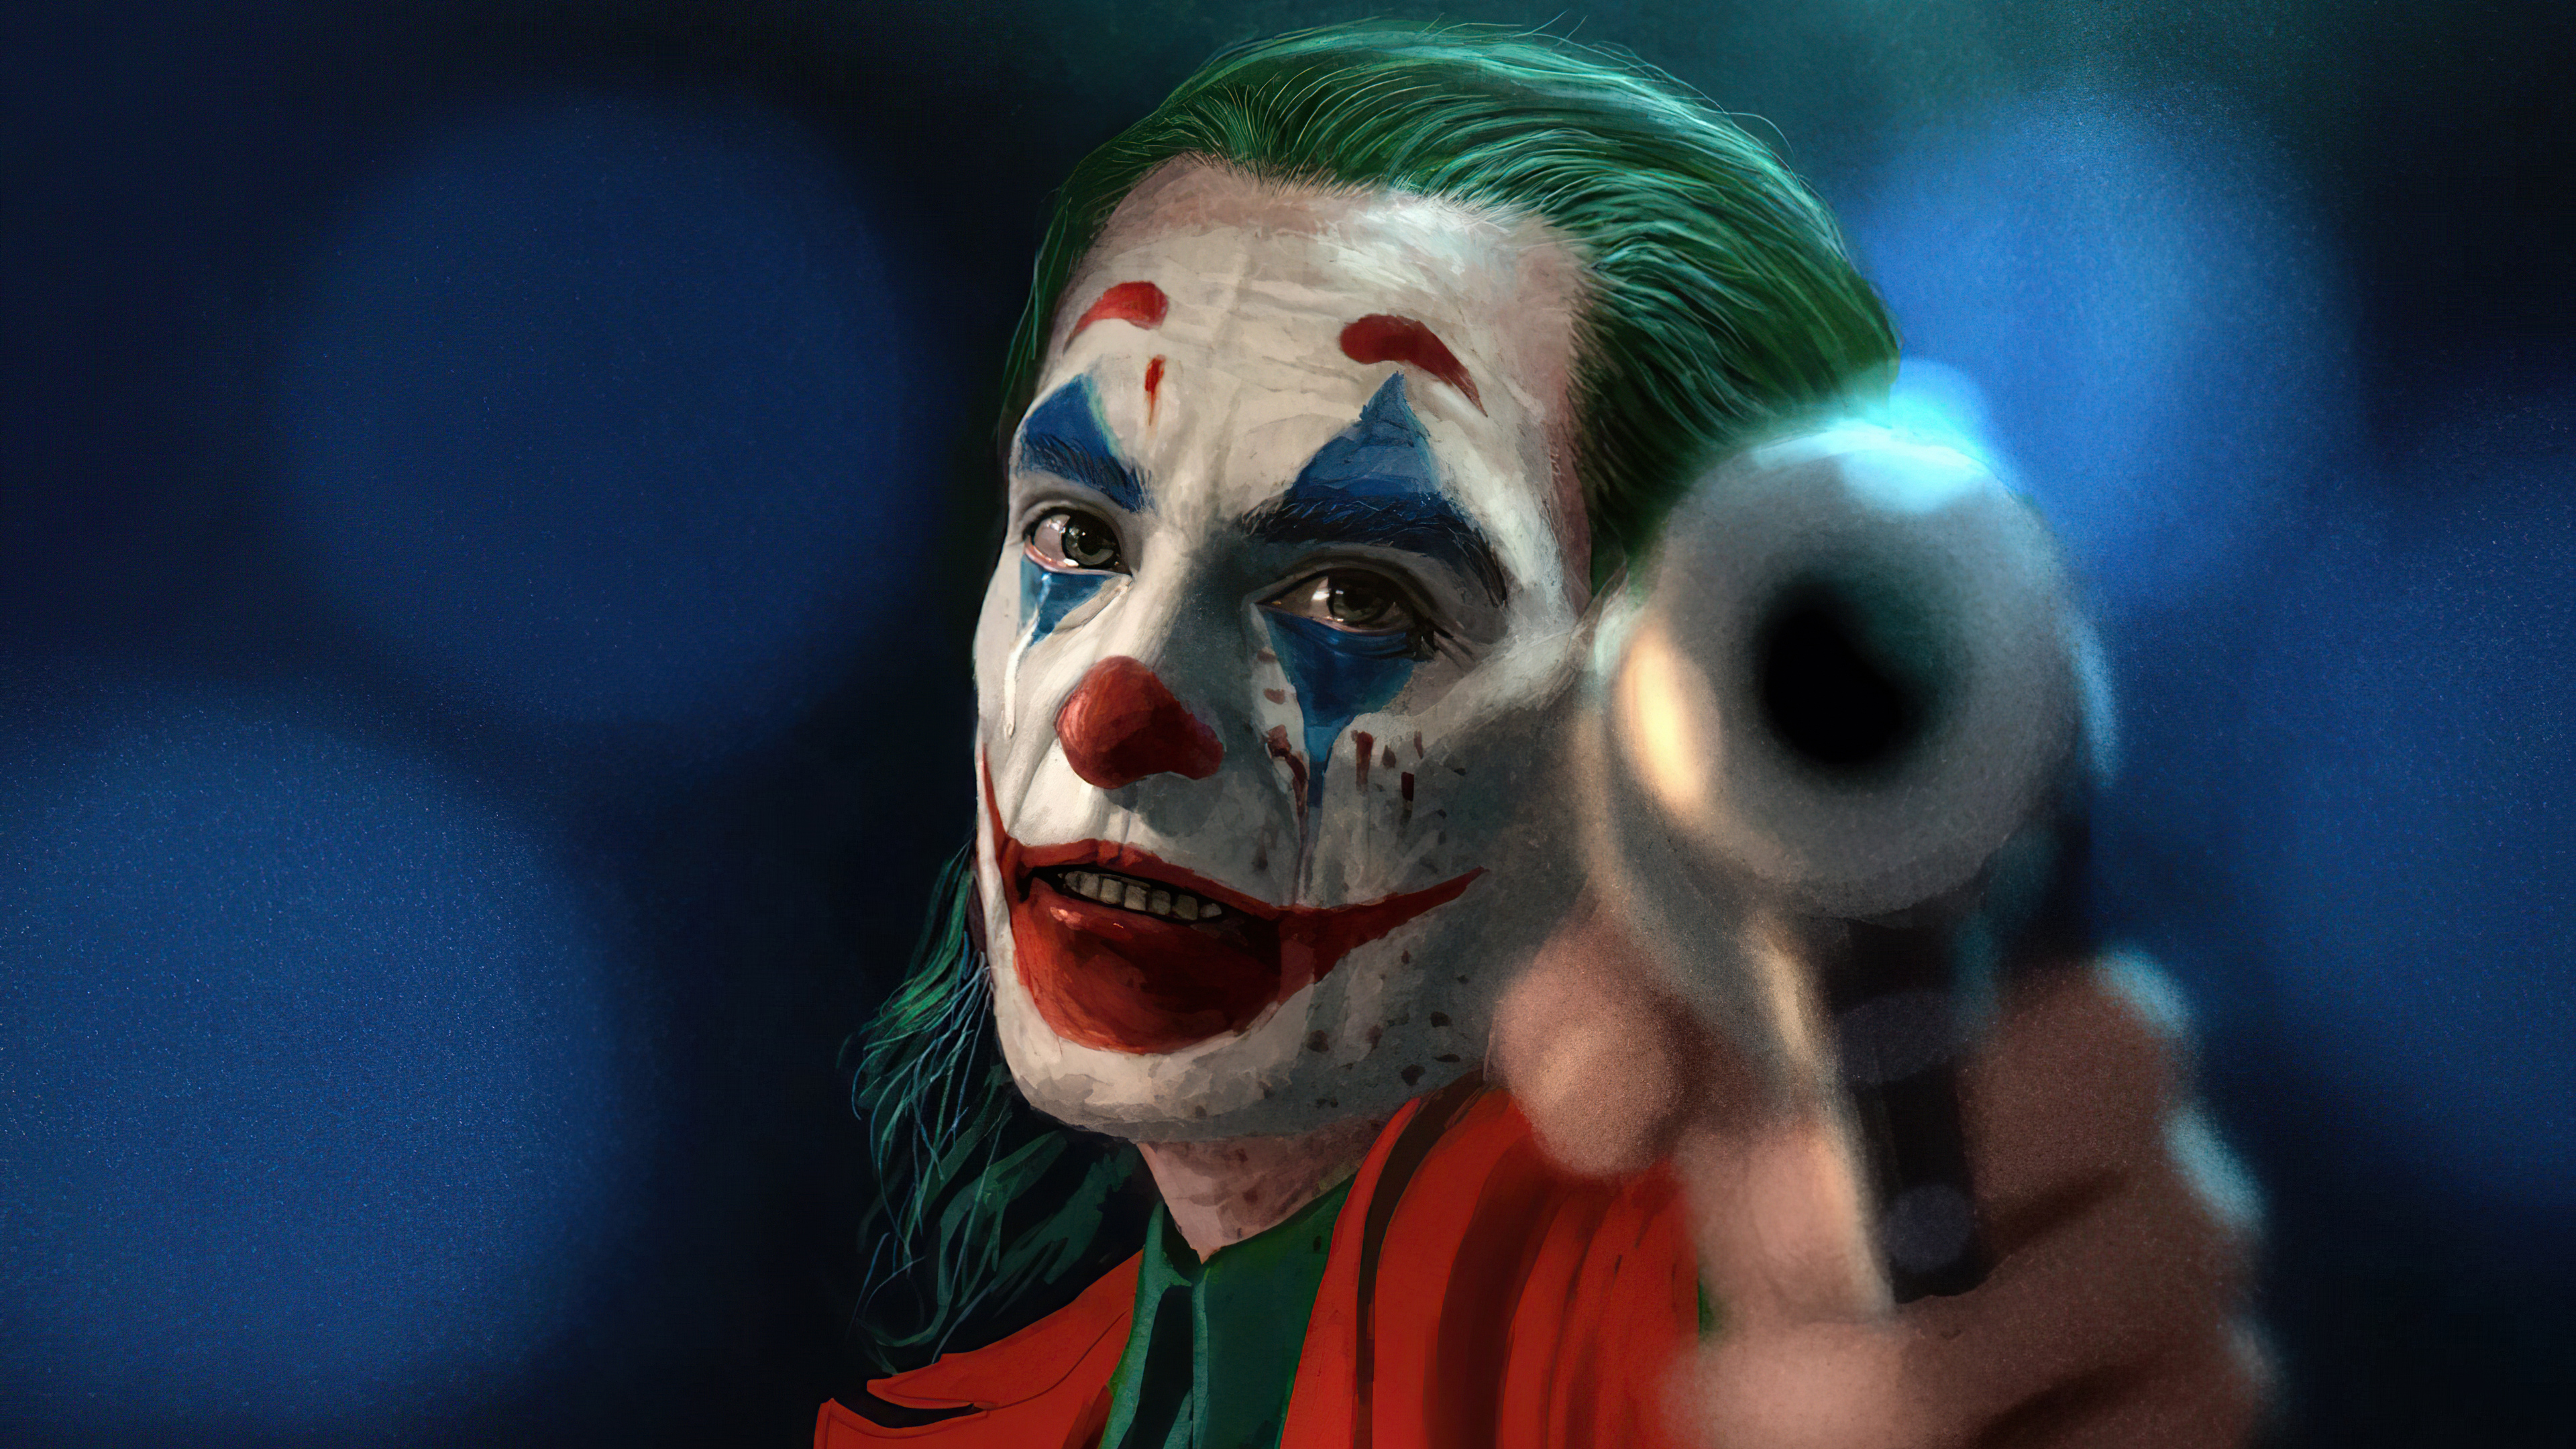 Joker pointing gun Wallpaper 4k Ultra HD ID:6376